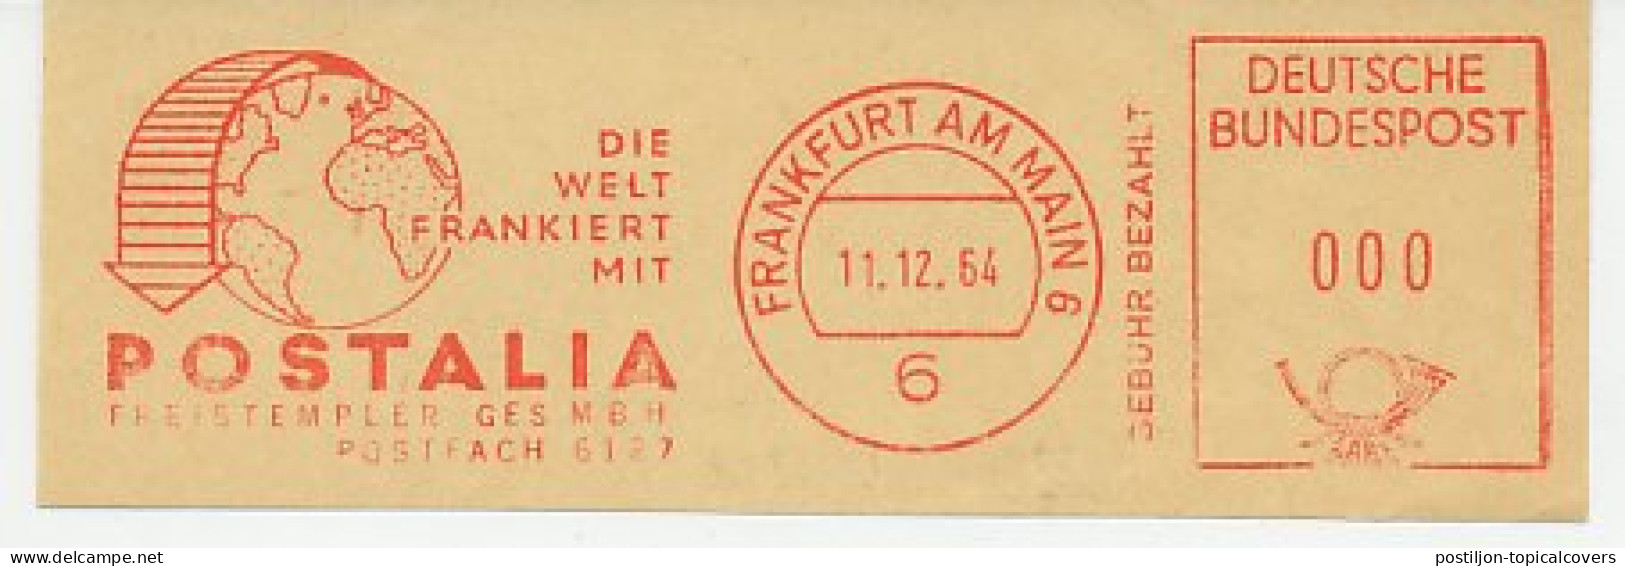 Meter Cut Germany 1964 Postalia - Gebuhr Bezahlt - Vignette [ATM]